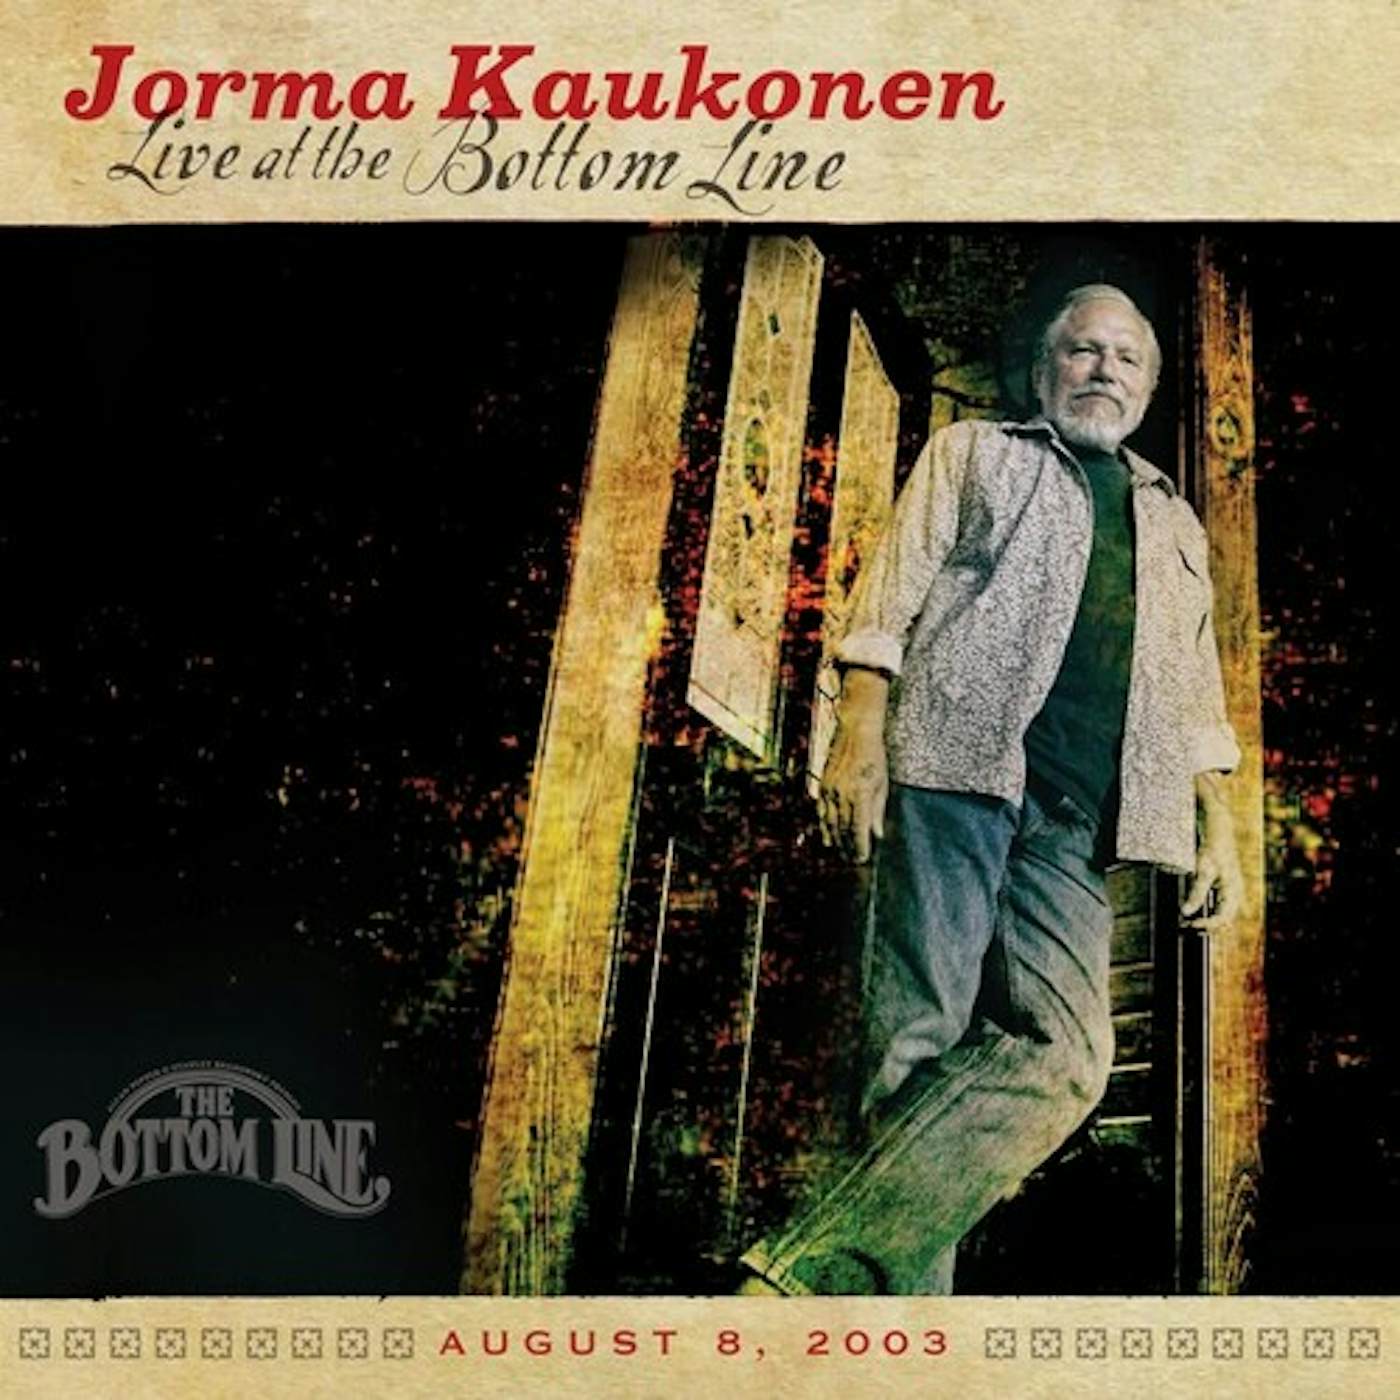 Jorma Kaukonen LIVE AT THE BOTTOM LINE CD